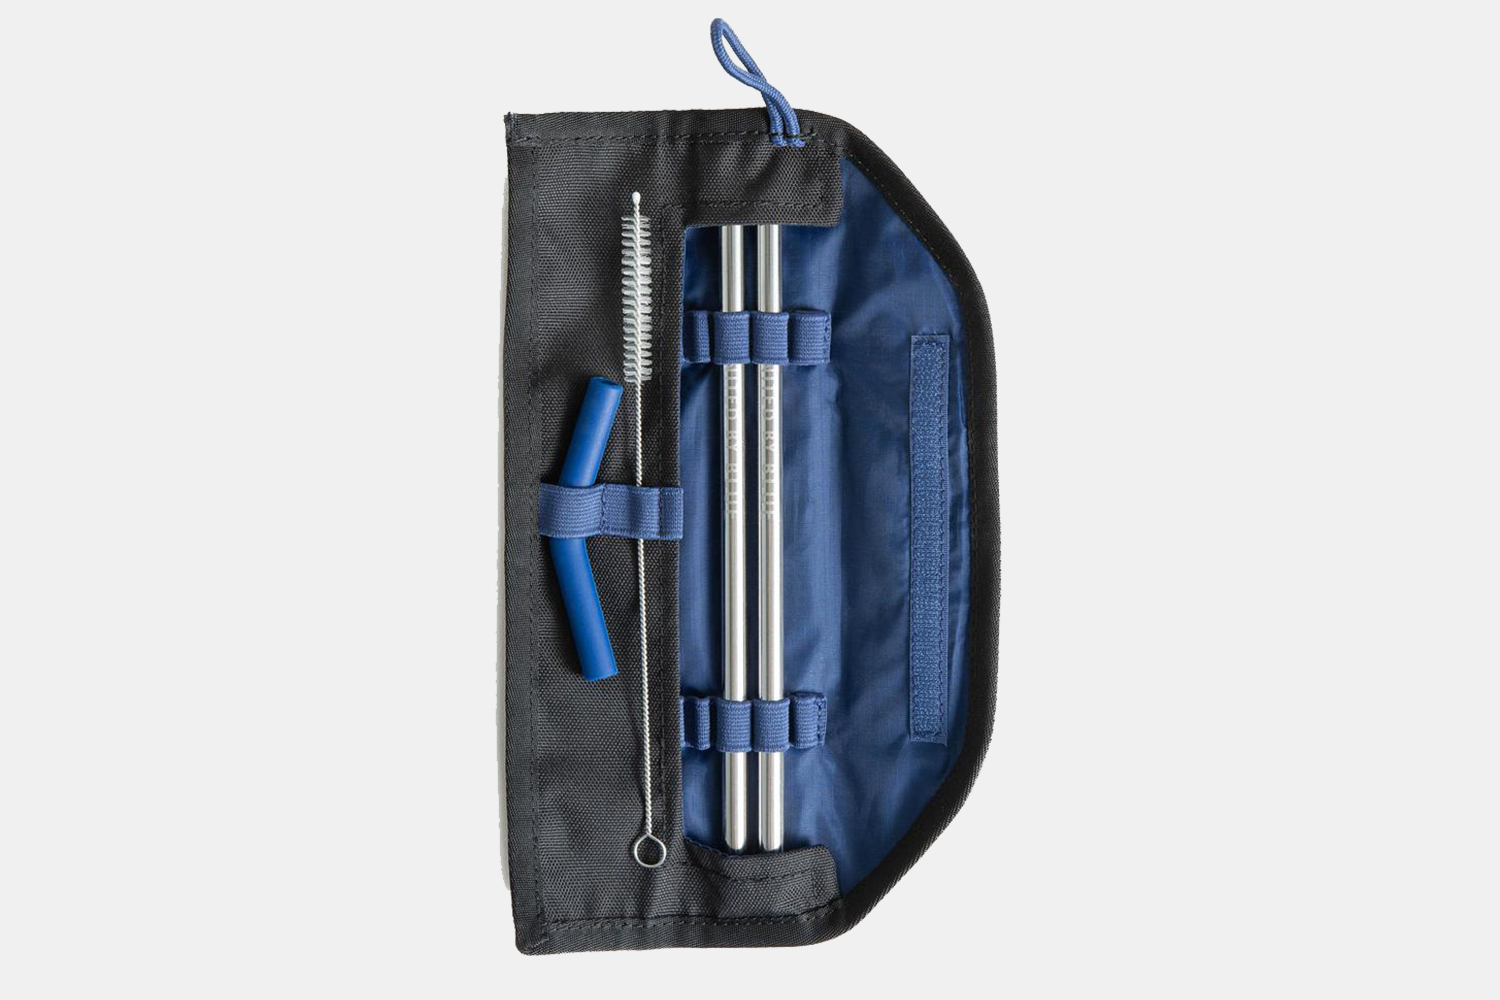 Best reusable metal straw kit